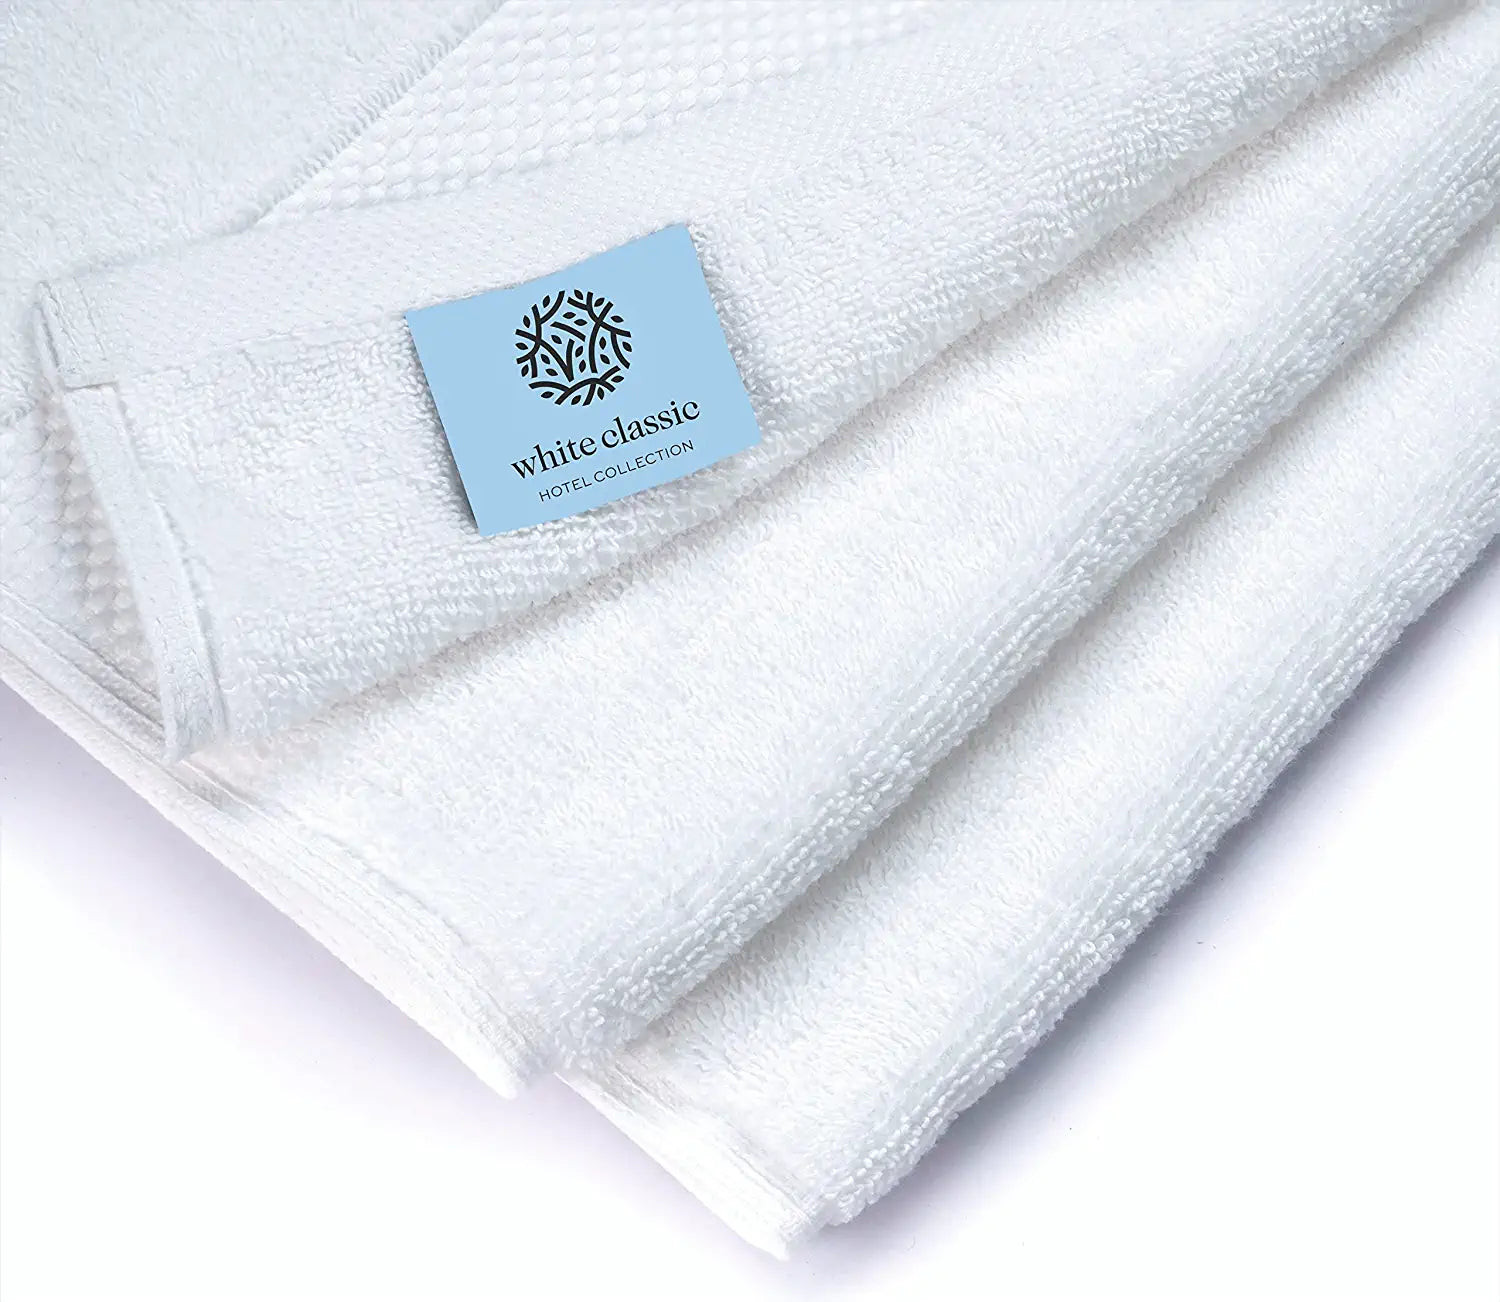 Hotel Towels 16×30 Hand Towel